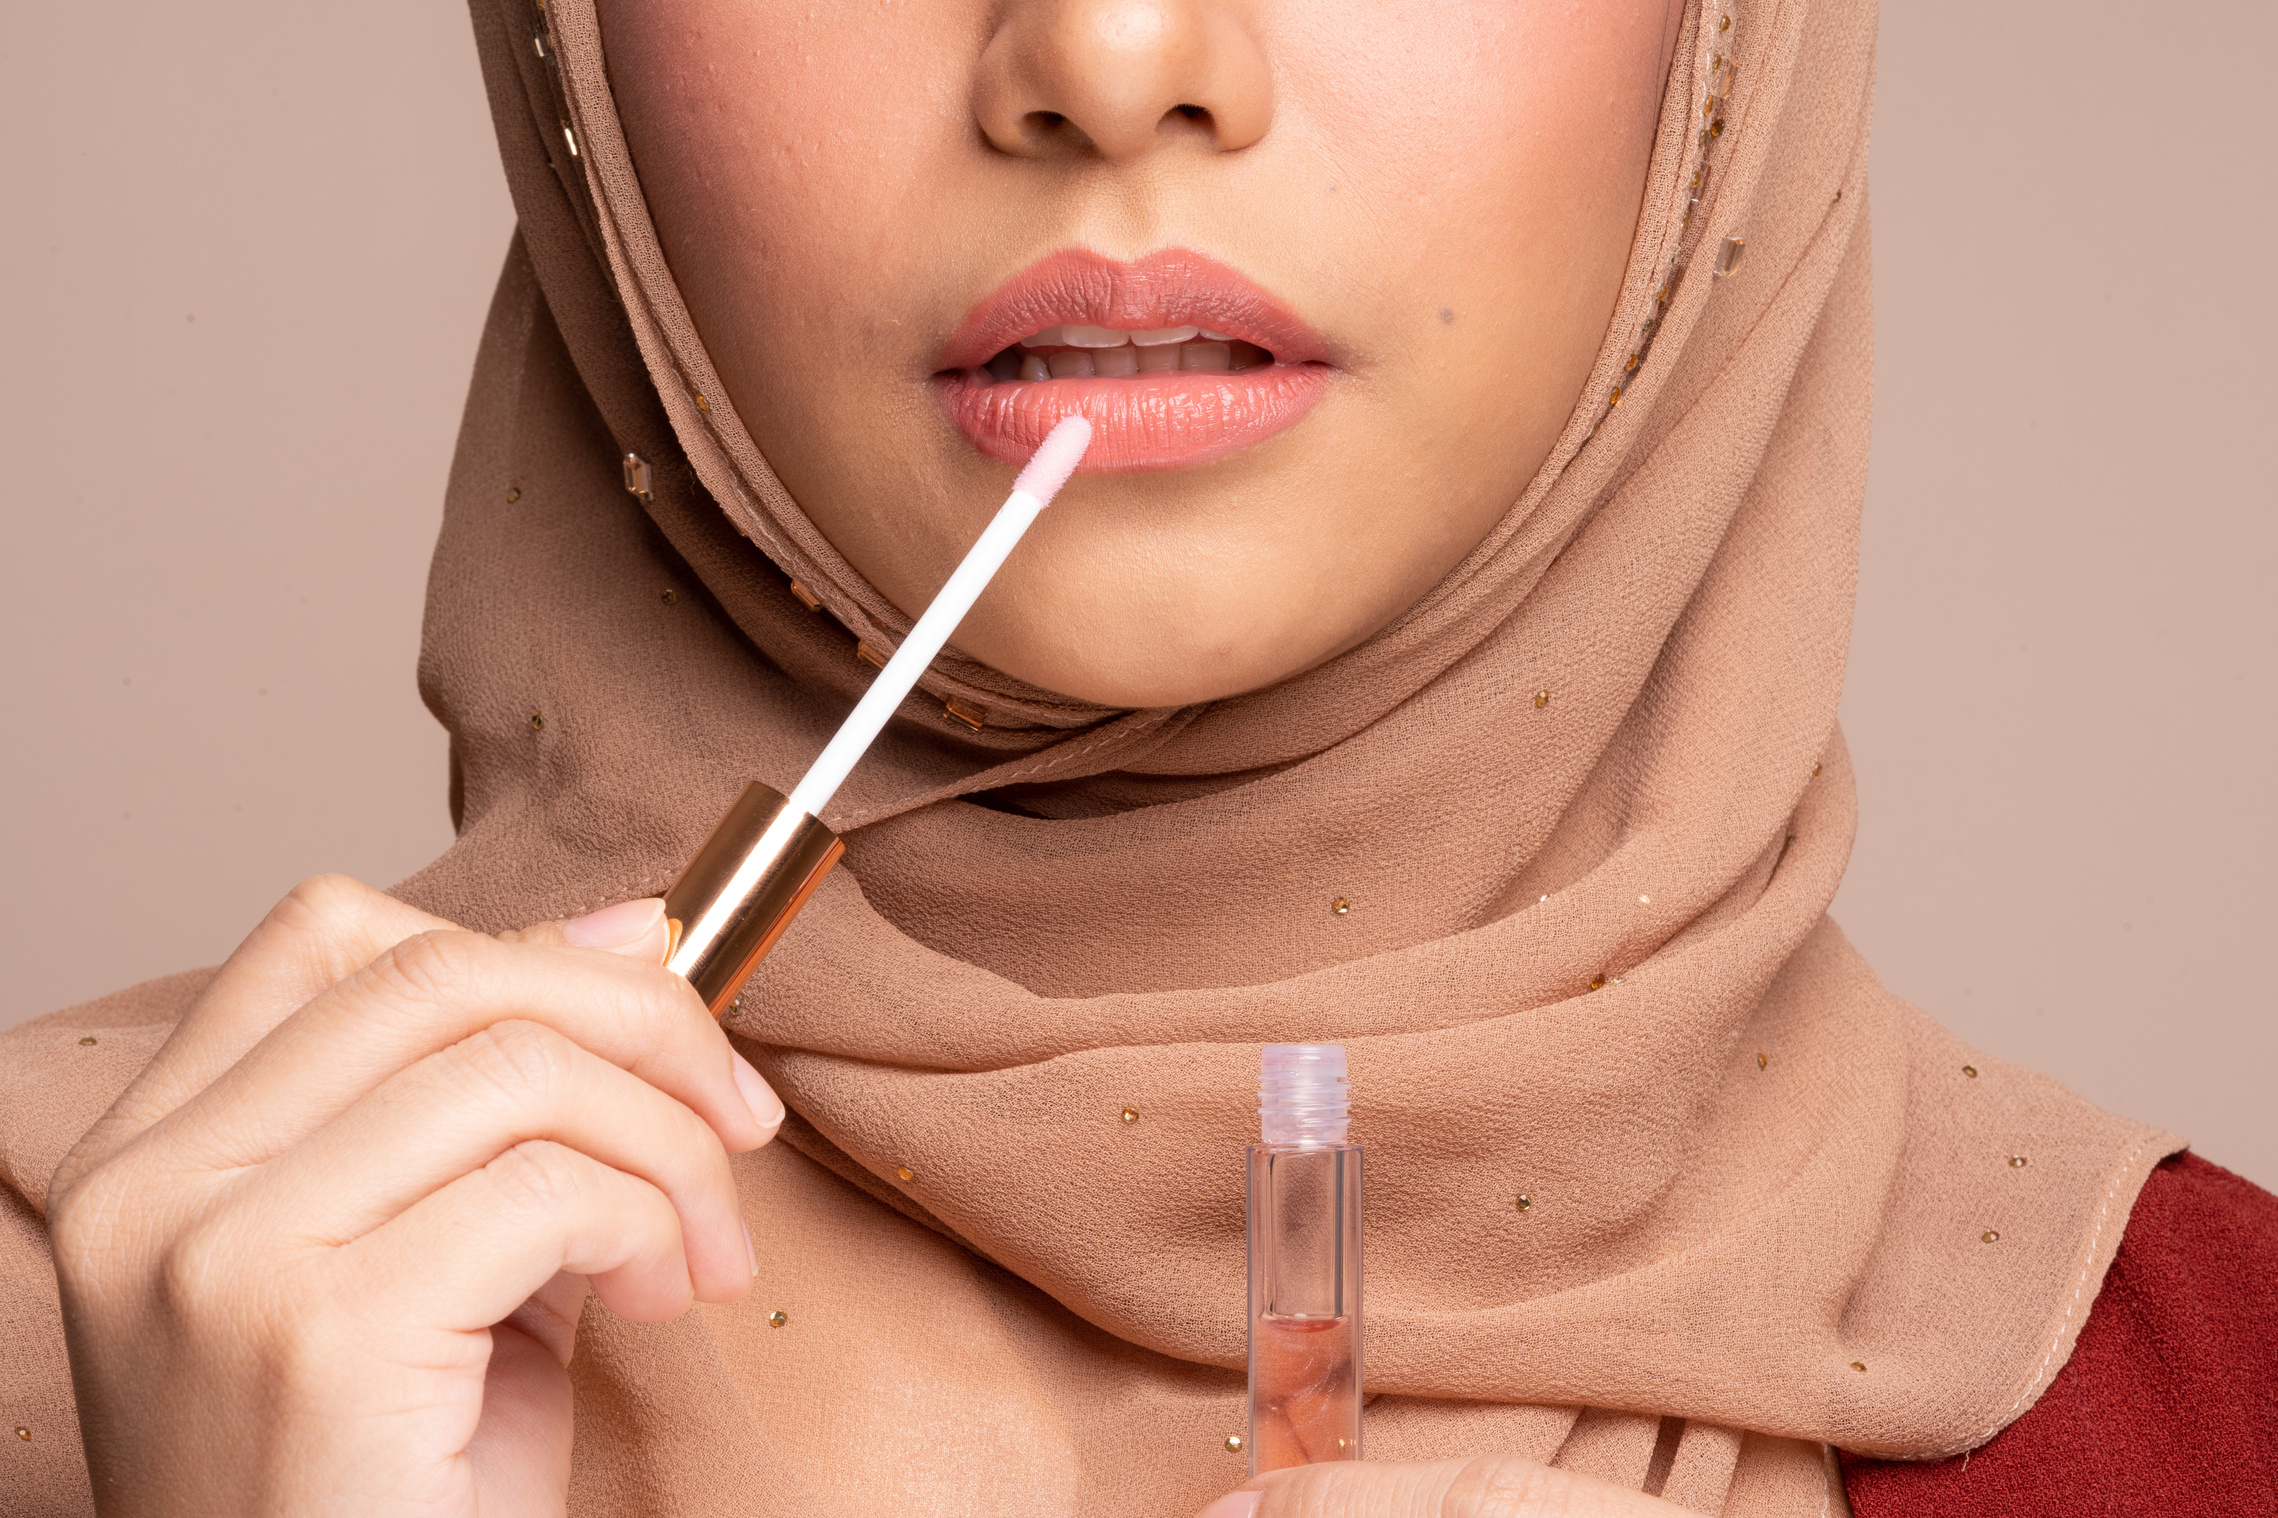 Woman Wearing Hijab and Applying Makeup